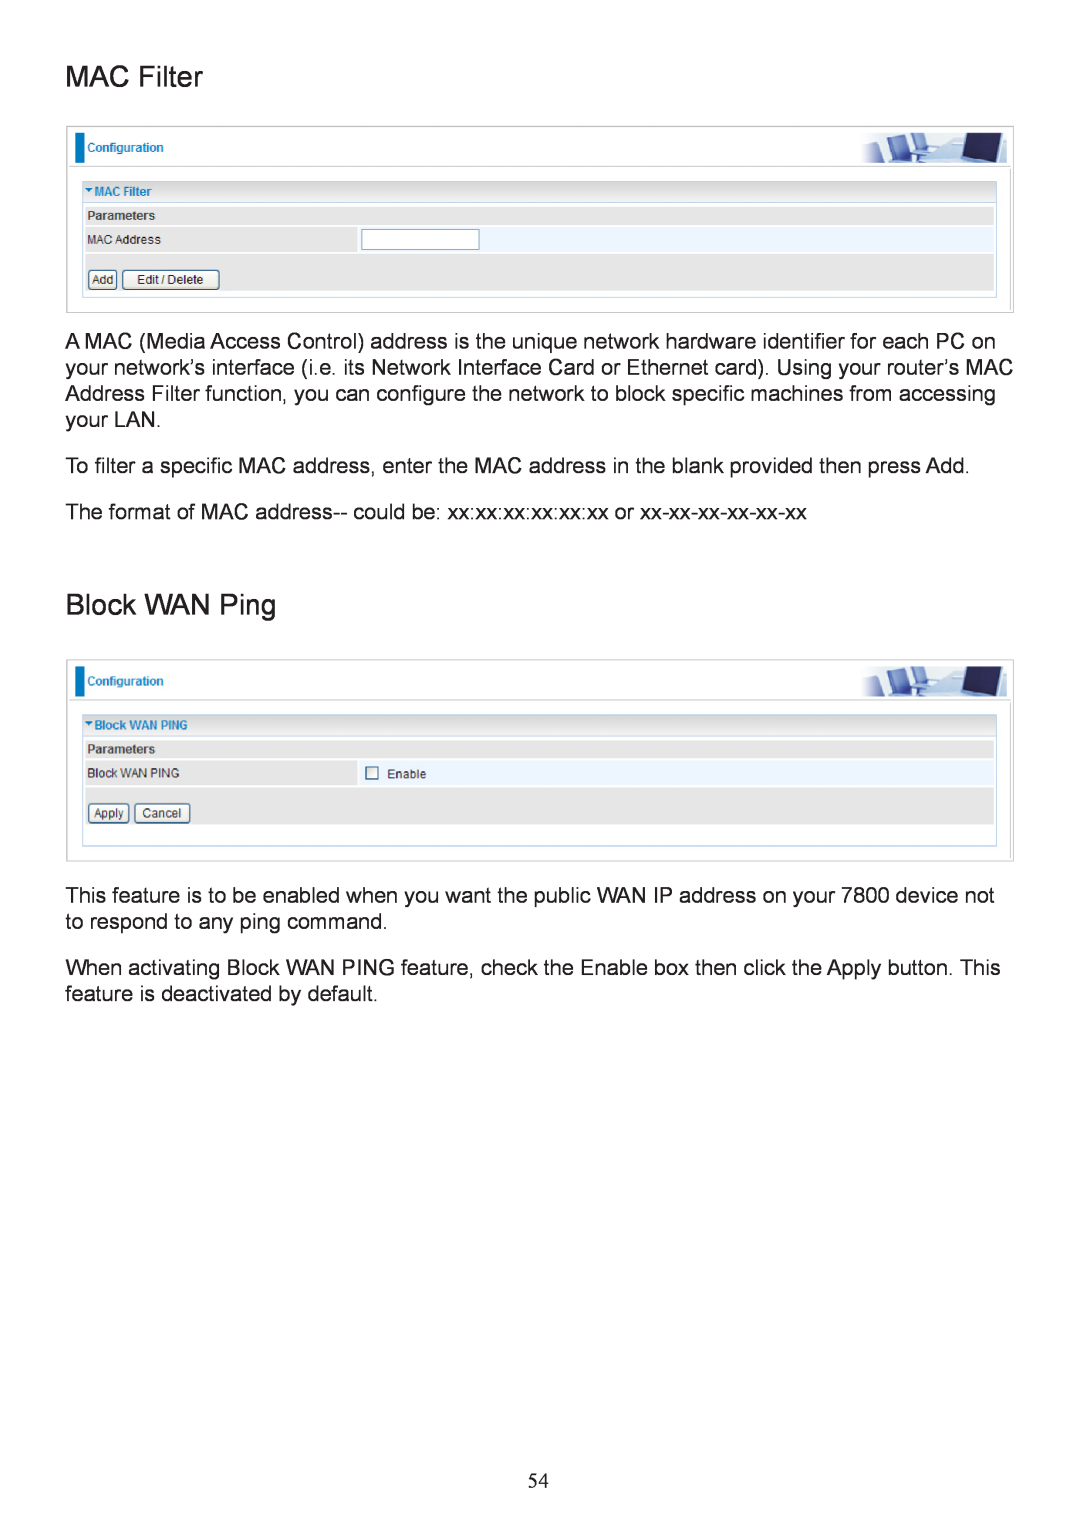 Billion Electric Company 7800 user manual MAC Filter, Block WAN Ping 